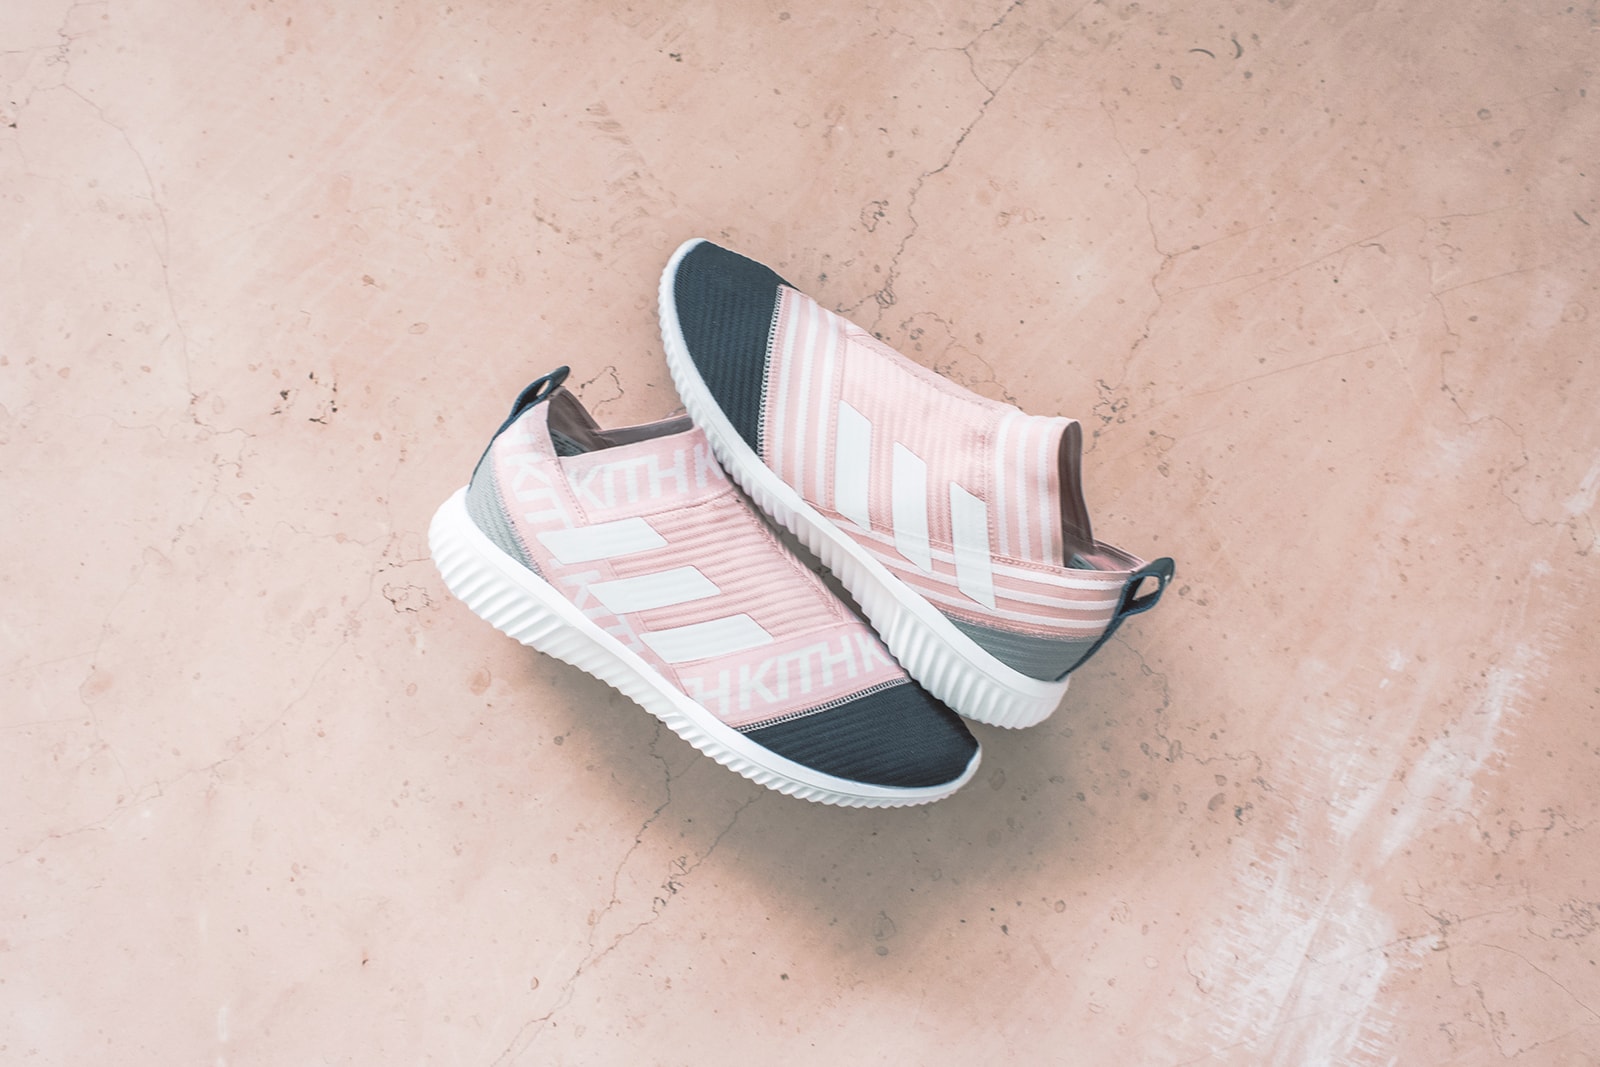 KITH Flamingos adidas Soccer Season 2 Footwear Nemziz Tango Pink 2017 November 3 Release Date Info Sneakers Shoes Footwear